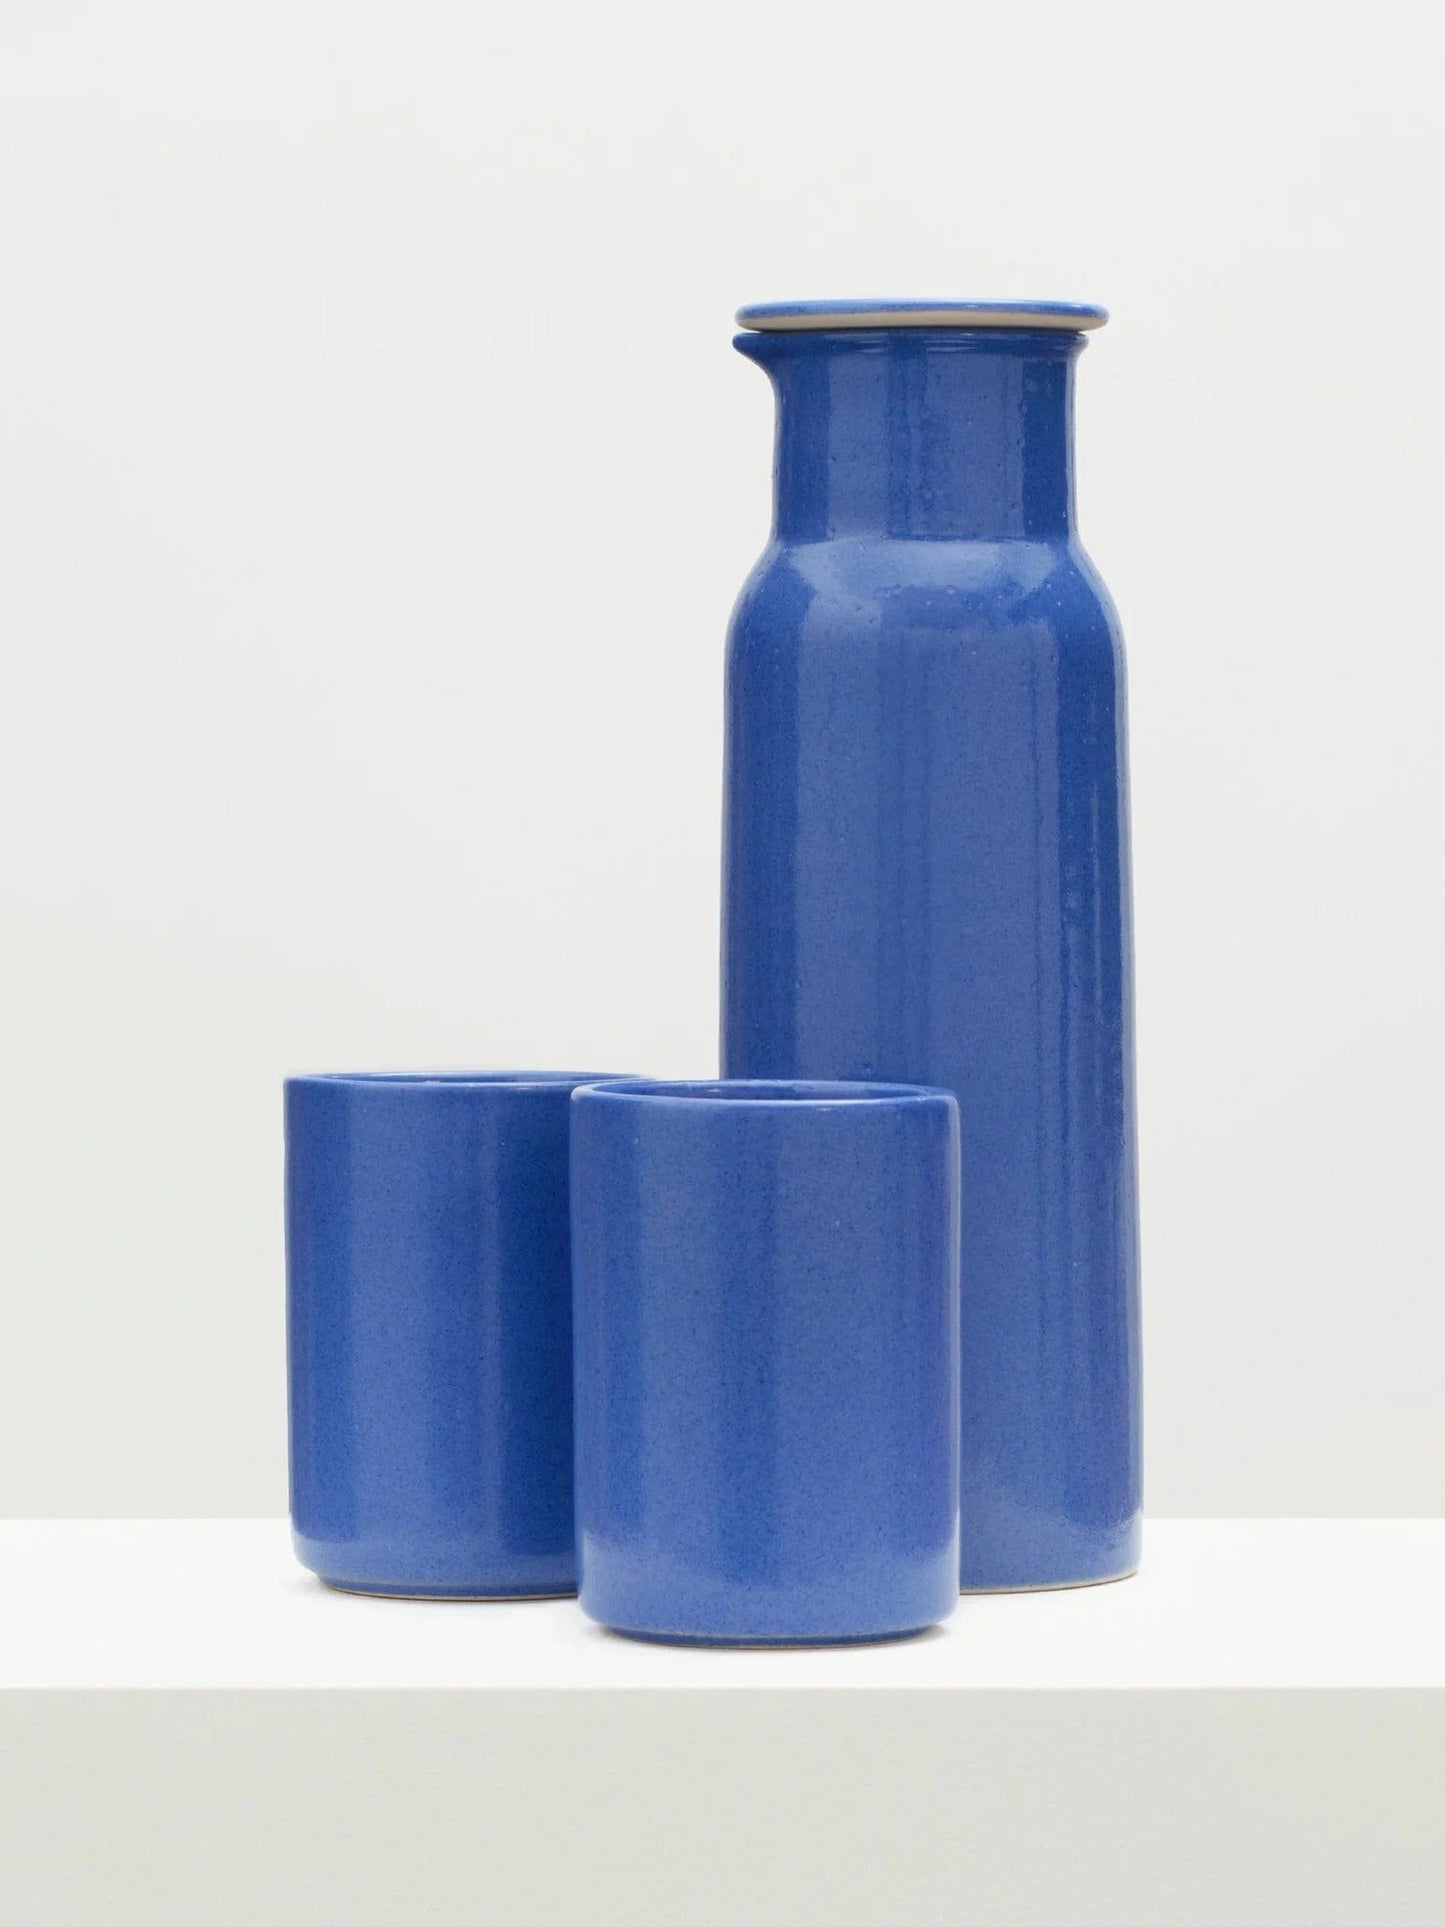 Lapis Ceramic Cup Decorative Objects